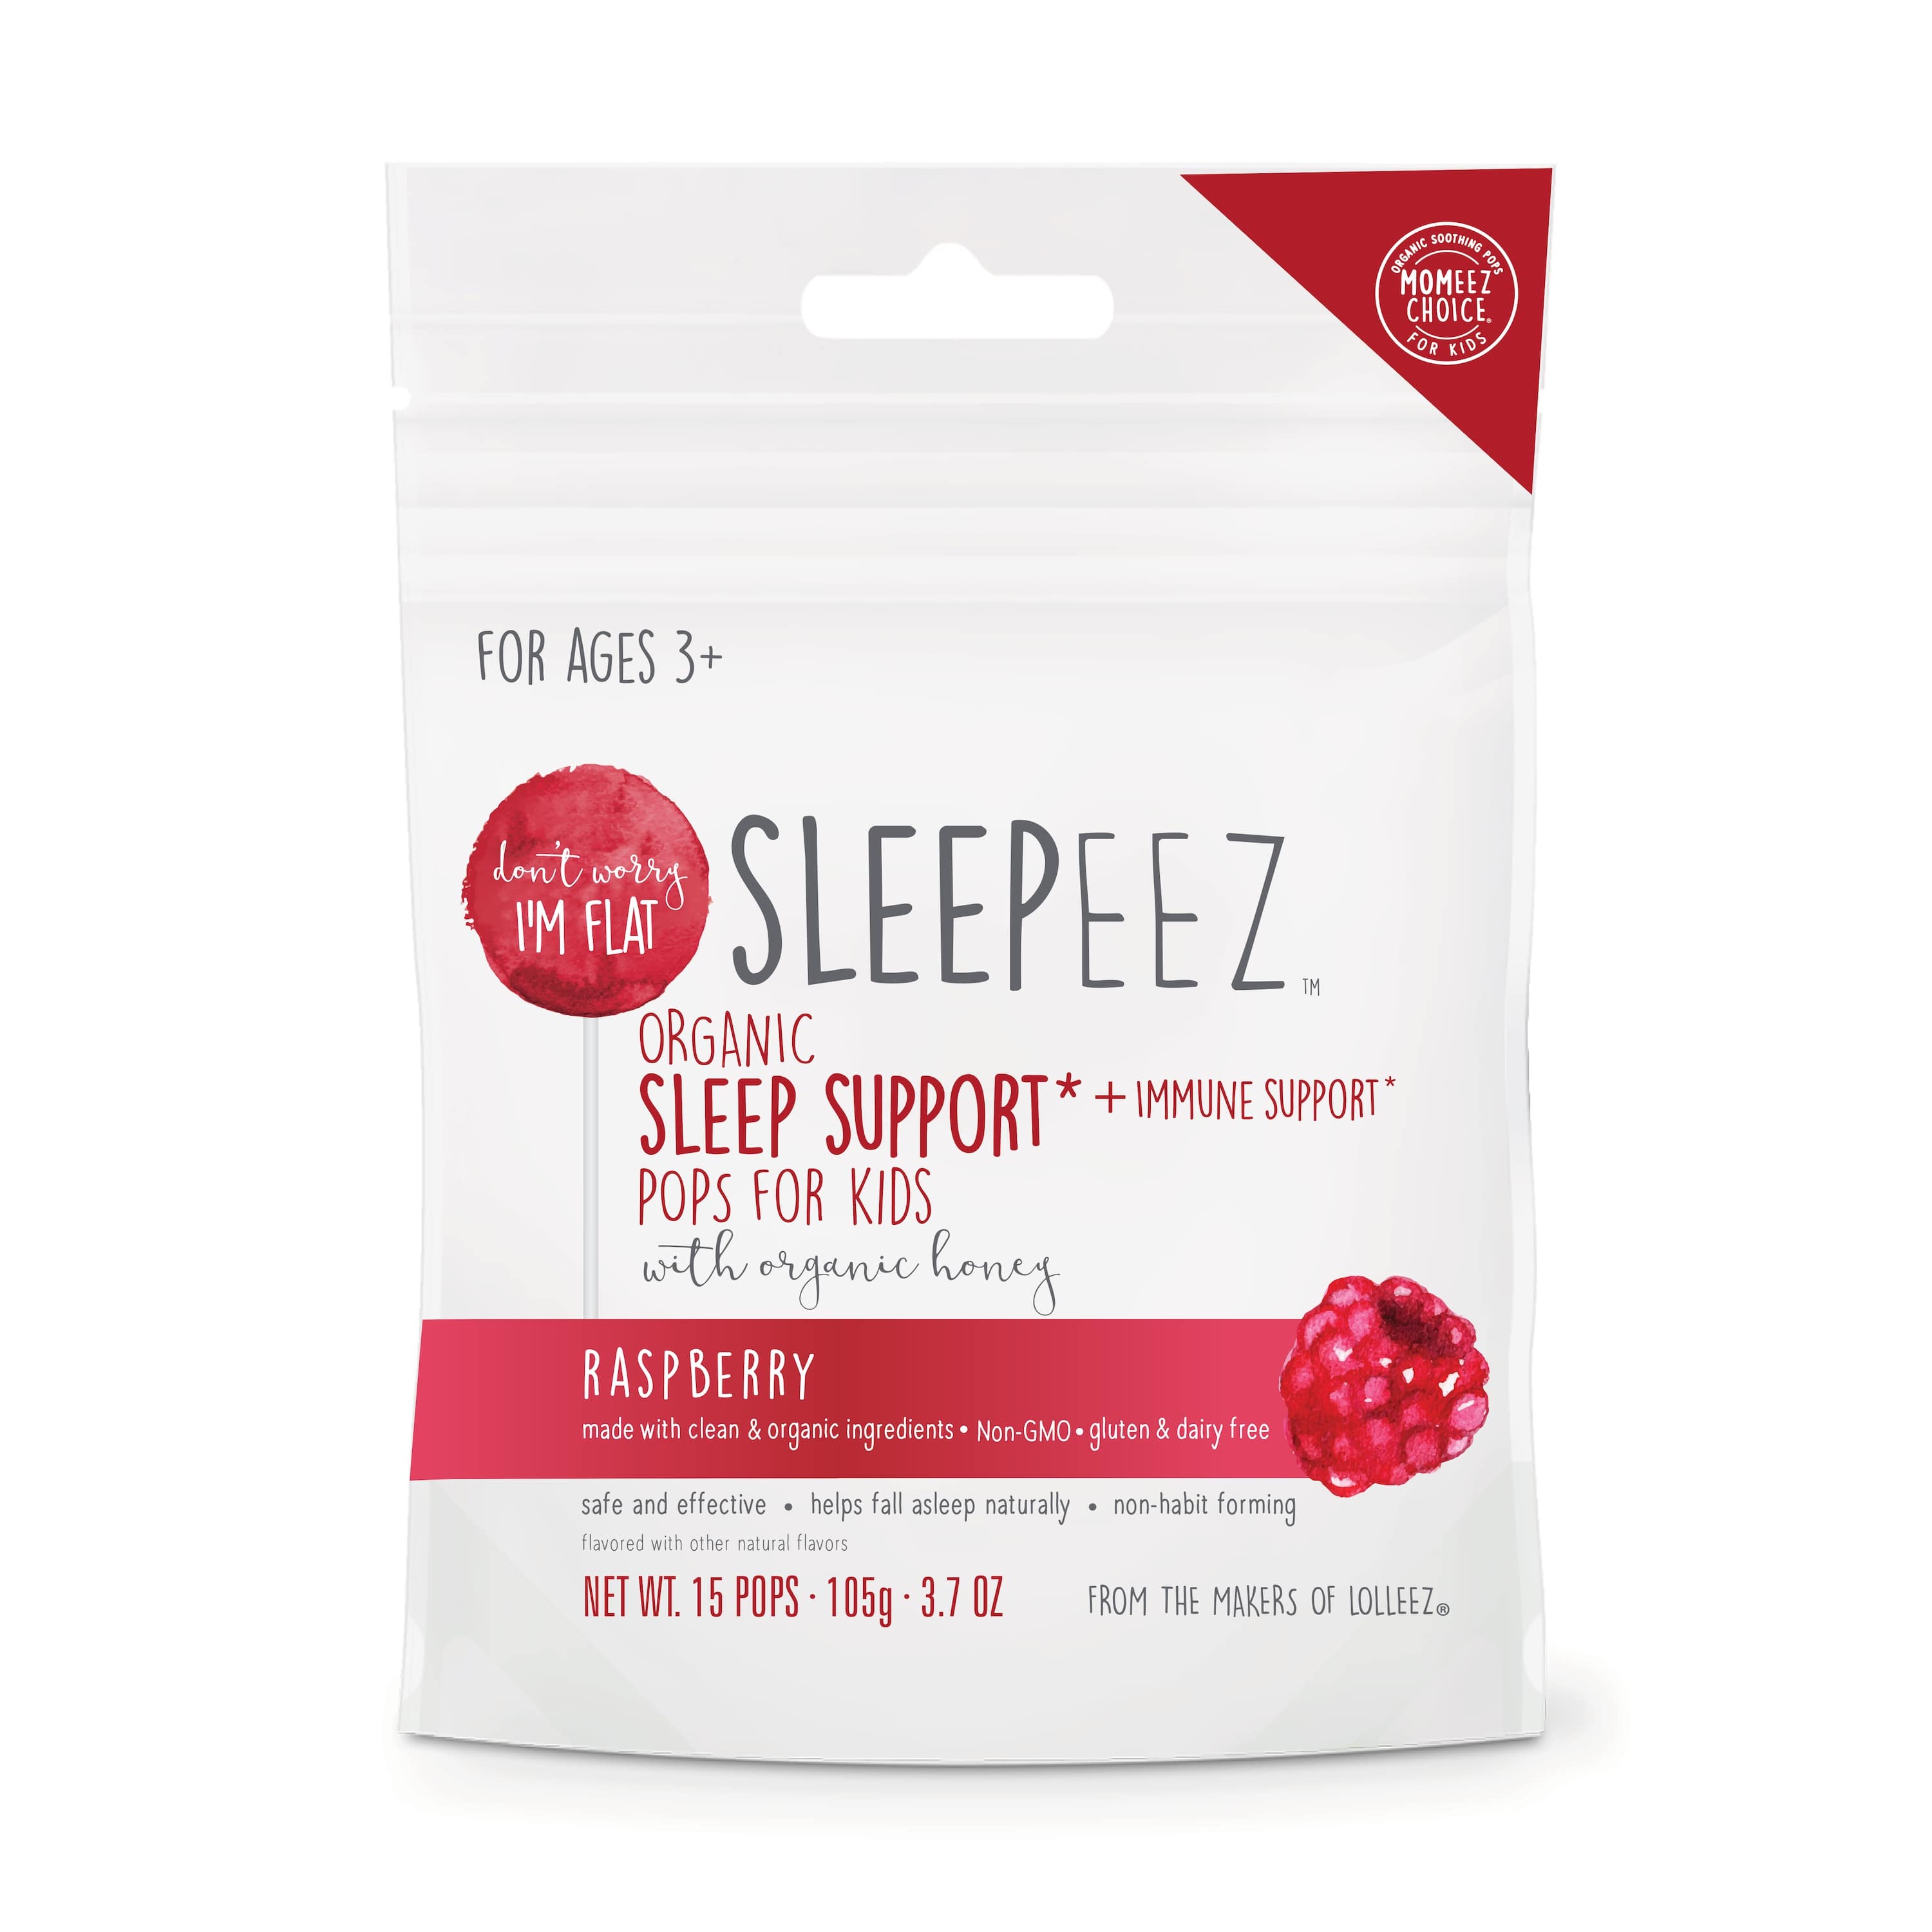 Sleepeez Organic Sleep Support + Immune Support Pops for Kids, Raspberry, 15 CT